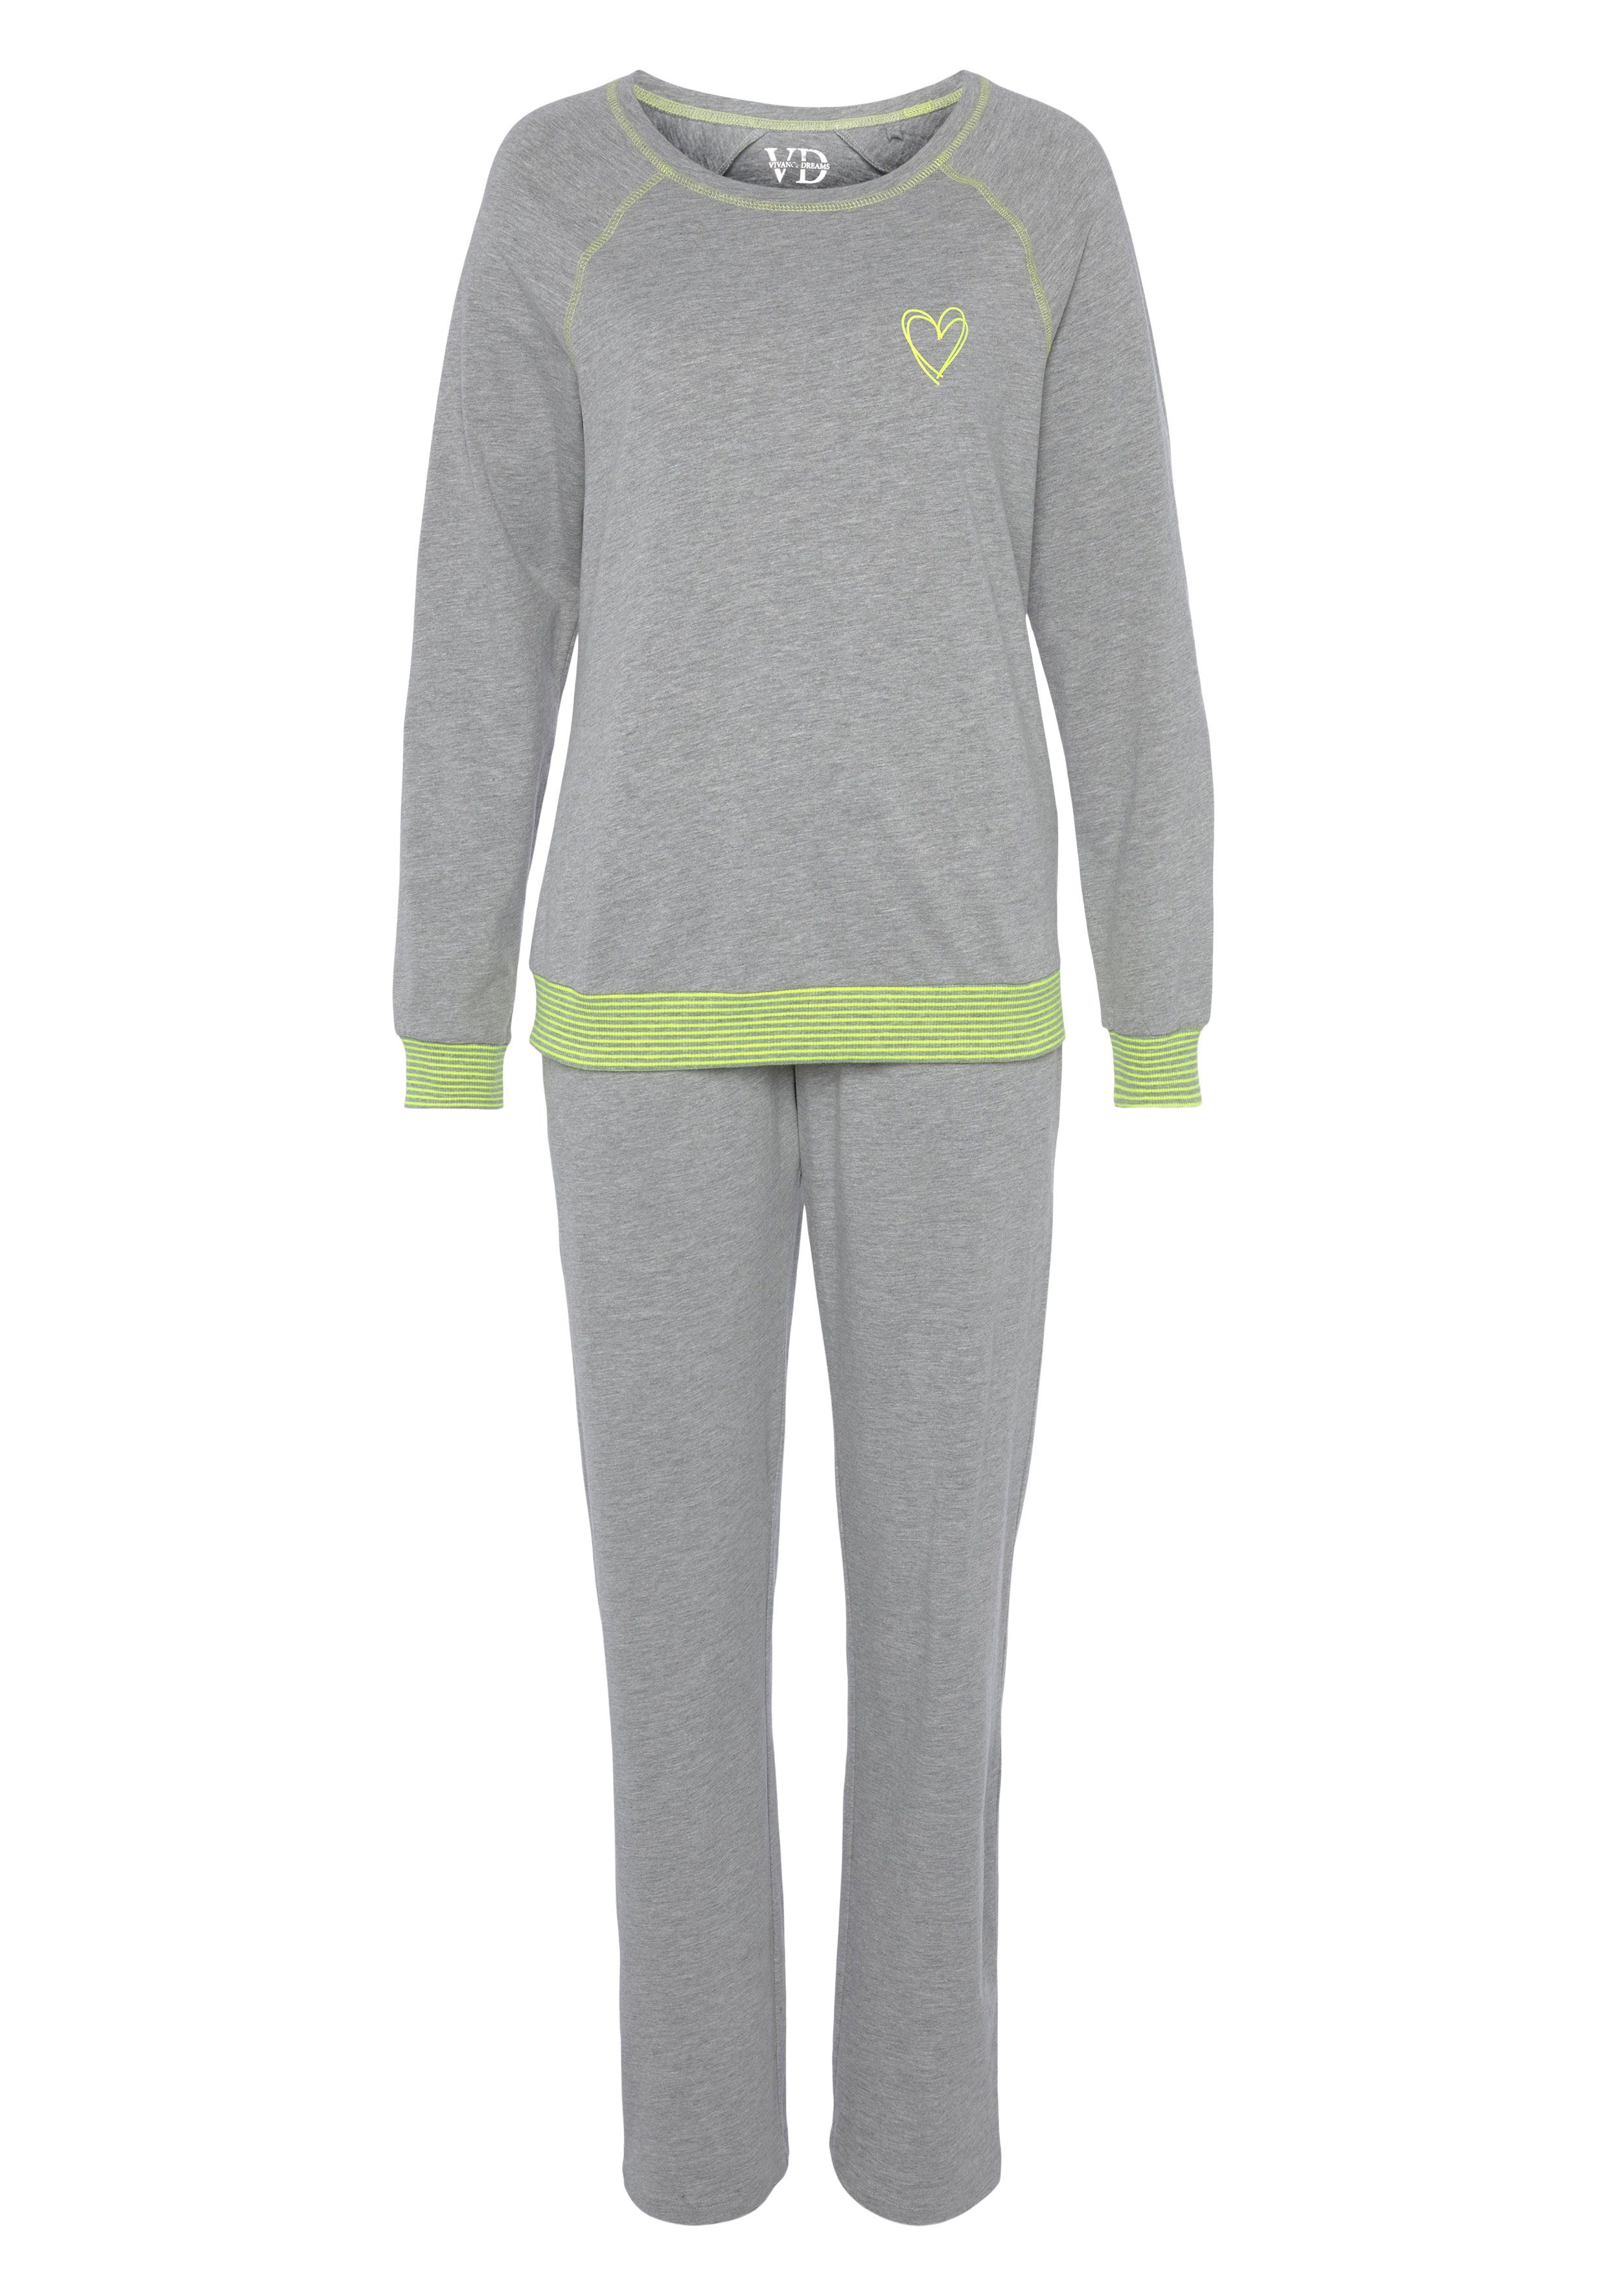 Vivance Dreams Pyjama (2 tlg) Flatlock-Nähten grau/neon-gelb mit in dekorativen Neonfarben